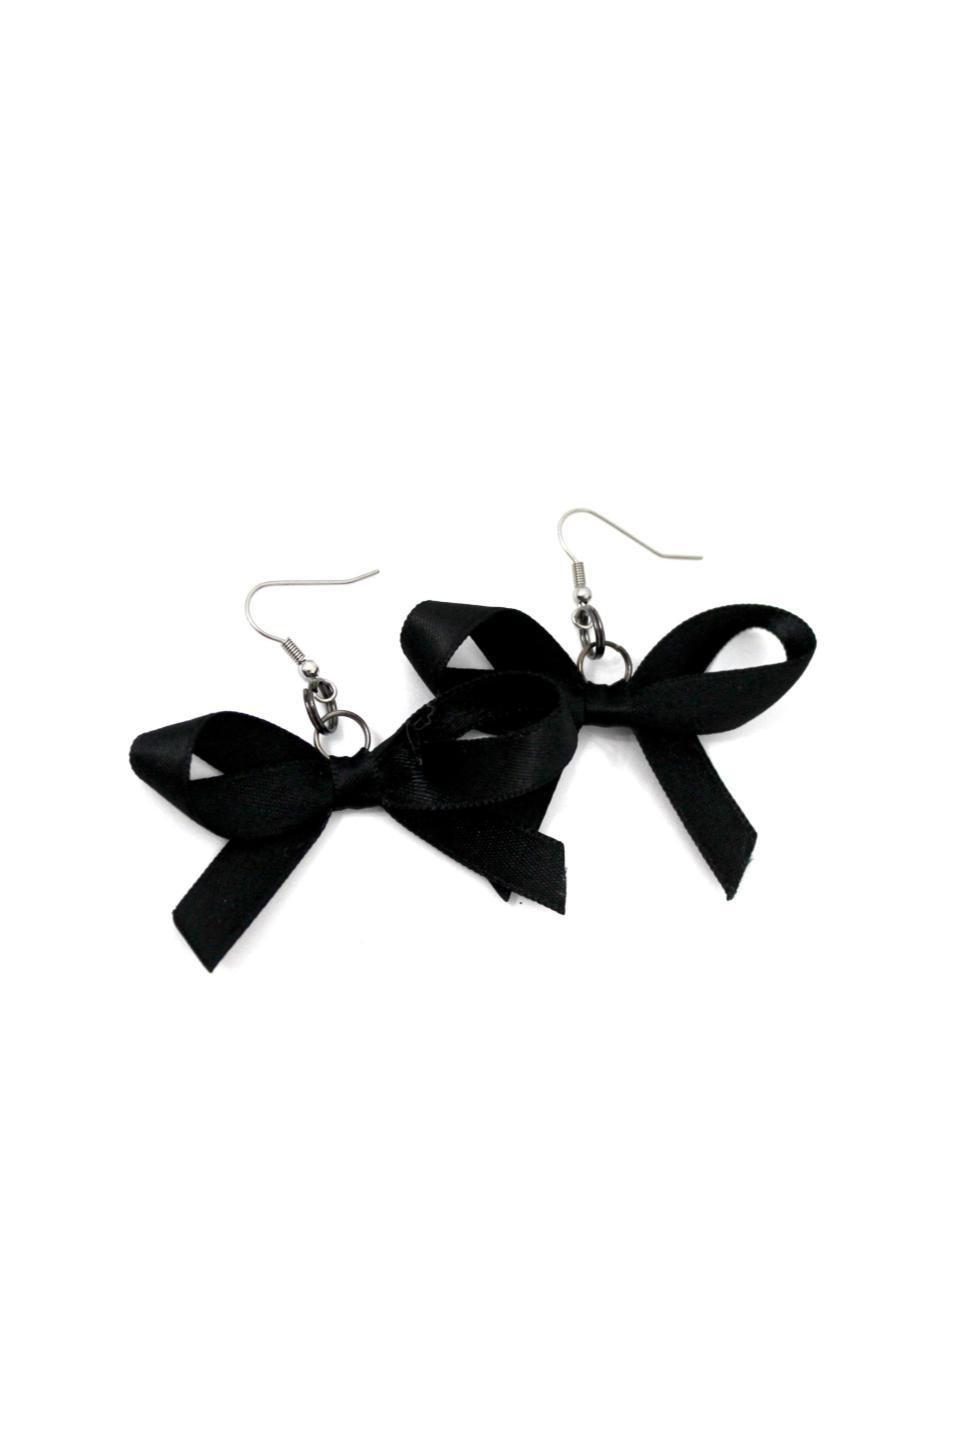 XO Eartyes-Body Jewelry-Tyes By Tara-Black-O/S-SEXYSHOES.COM